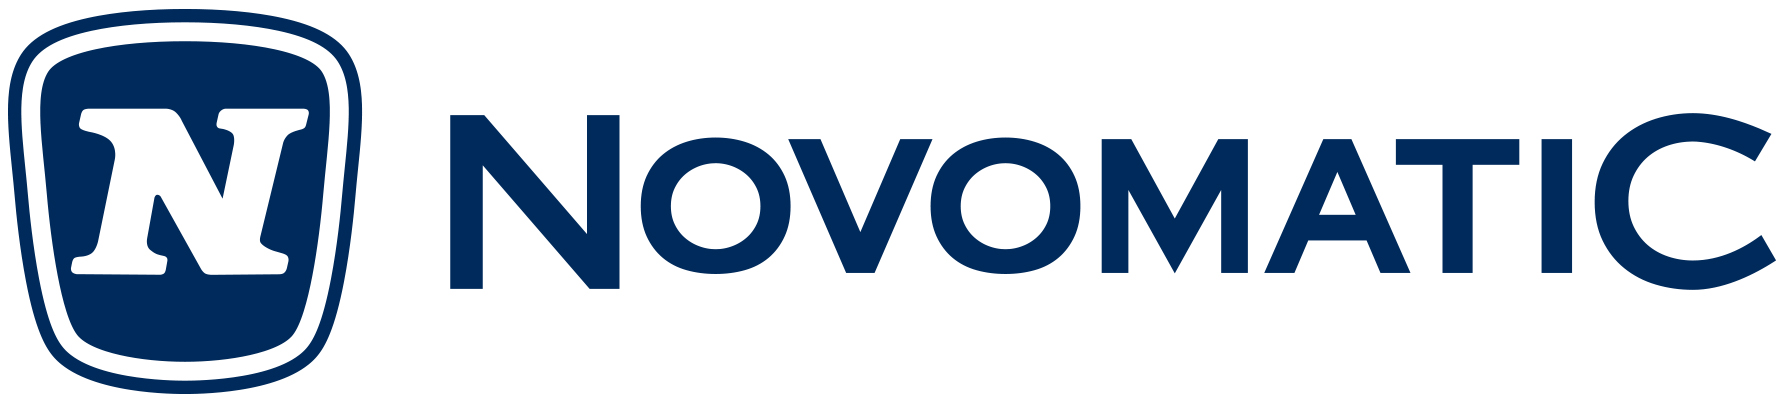 Novomatic Brand Logo